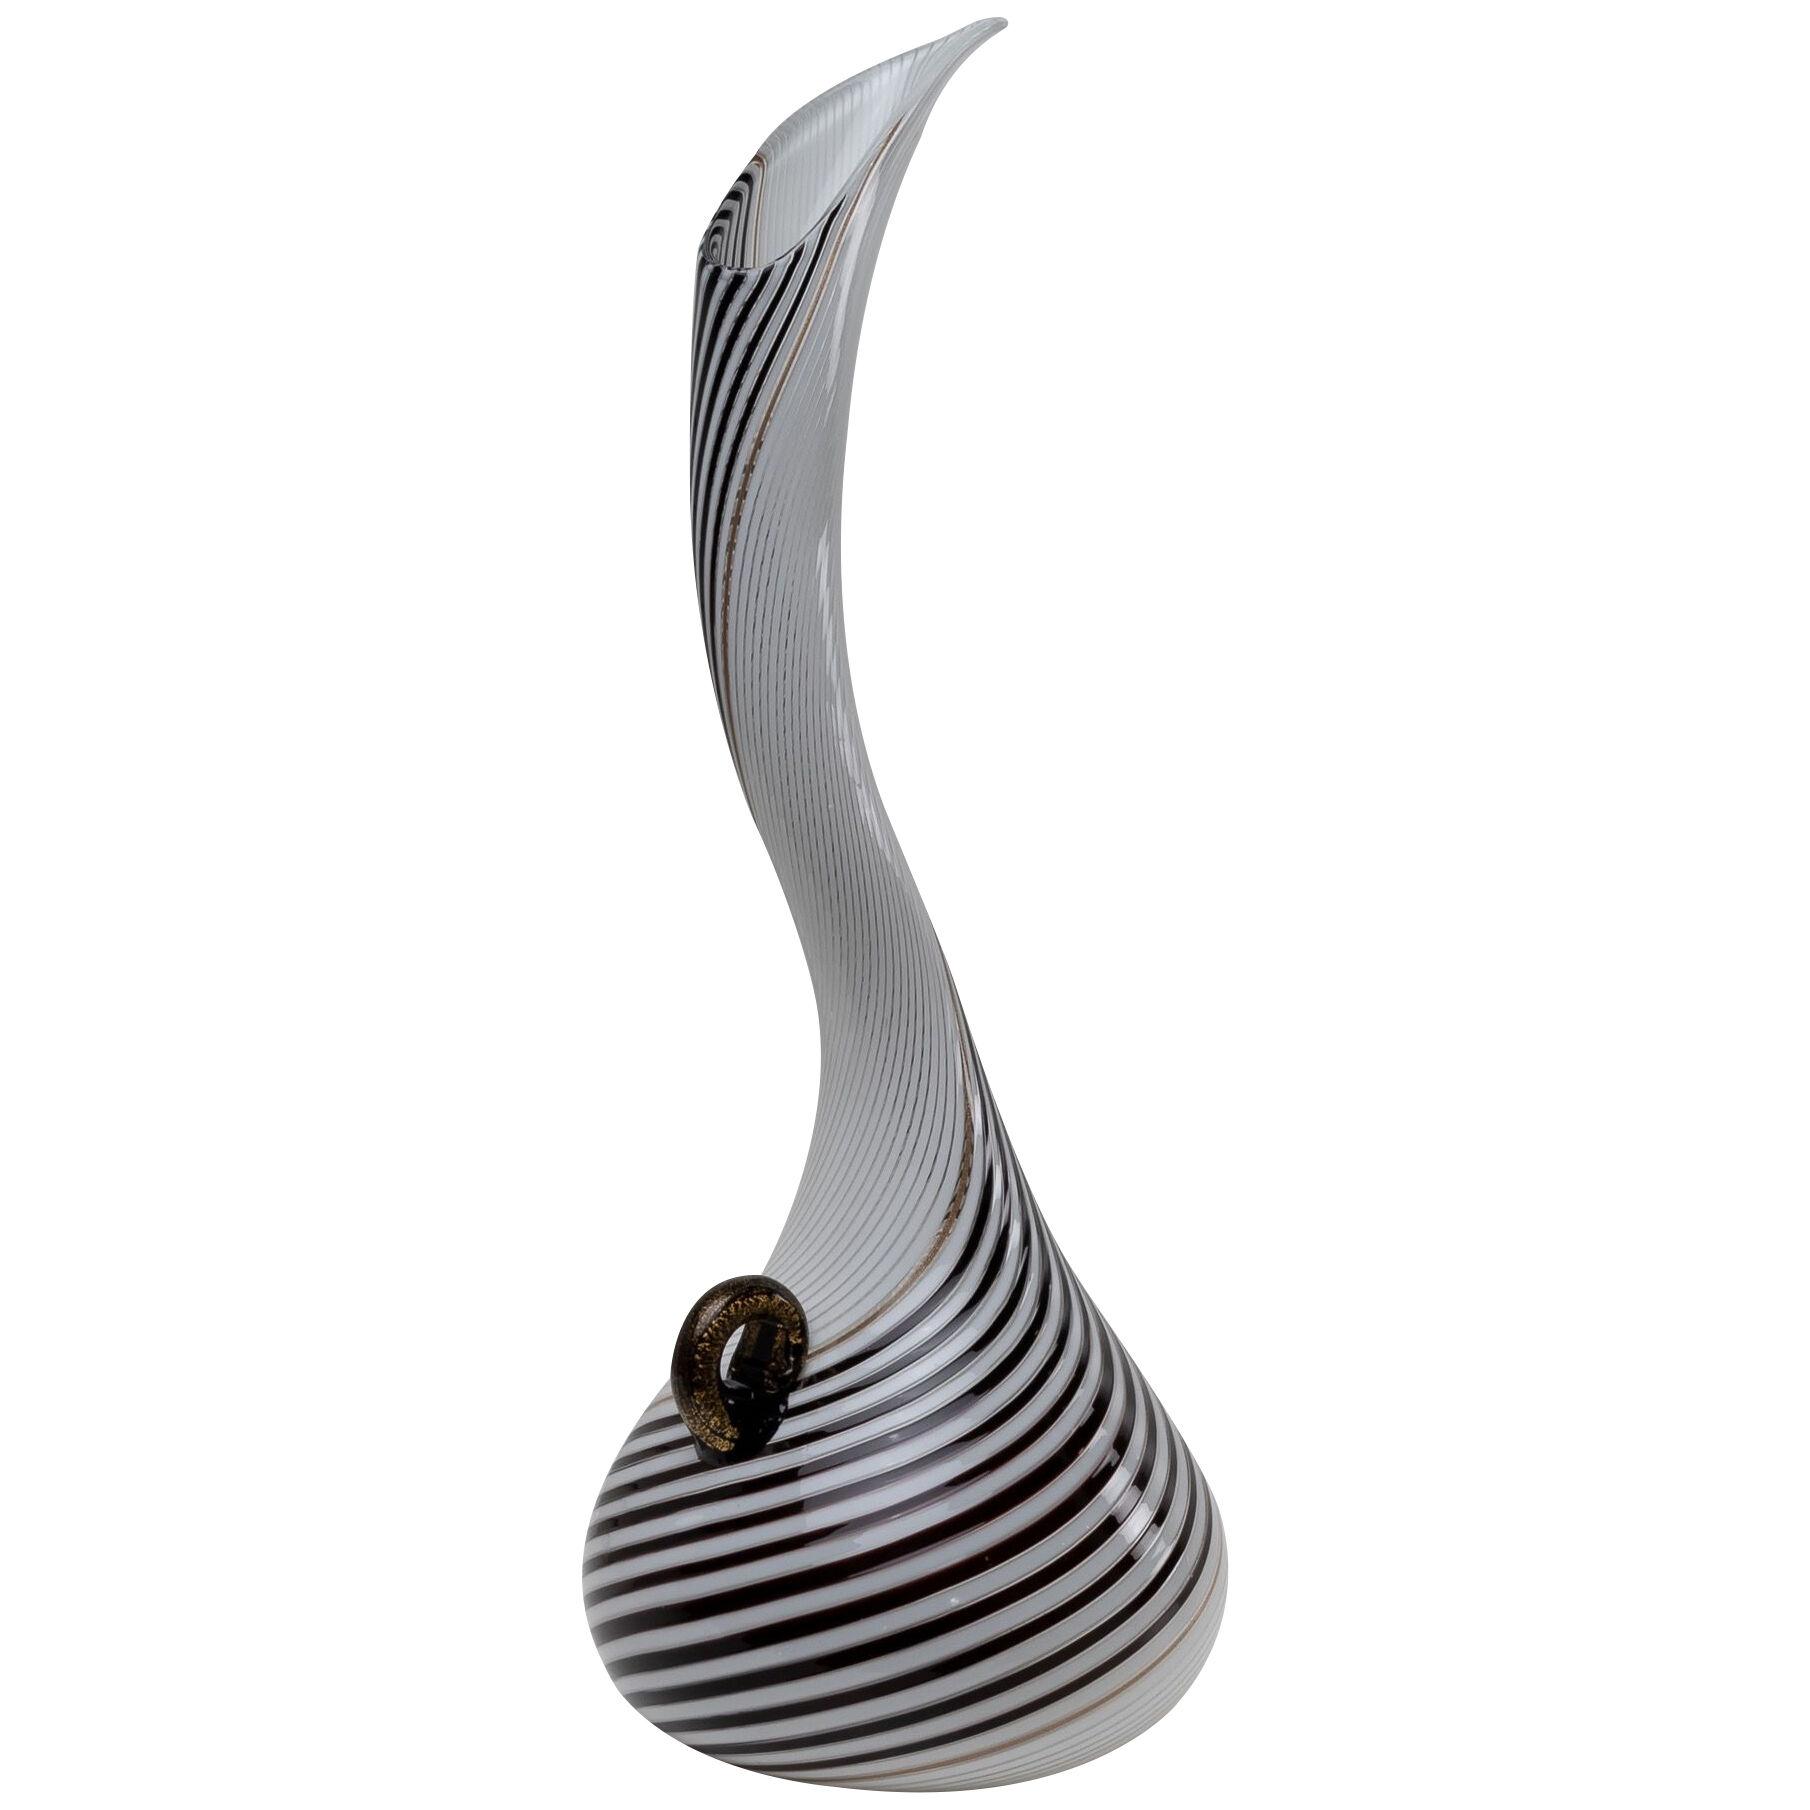 Bianco Nero swan neck tall vase by Dino Martens – Aureliano Toso Murano Italy